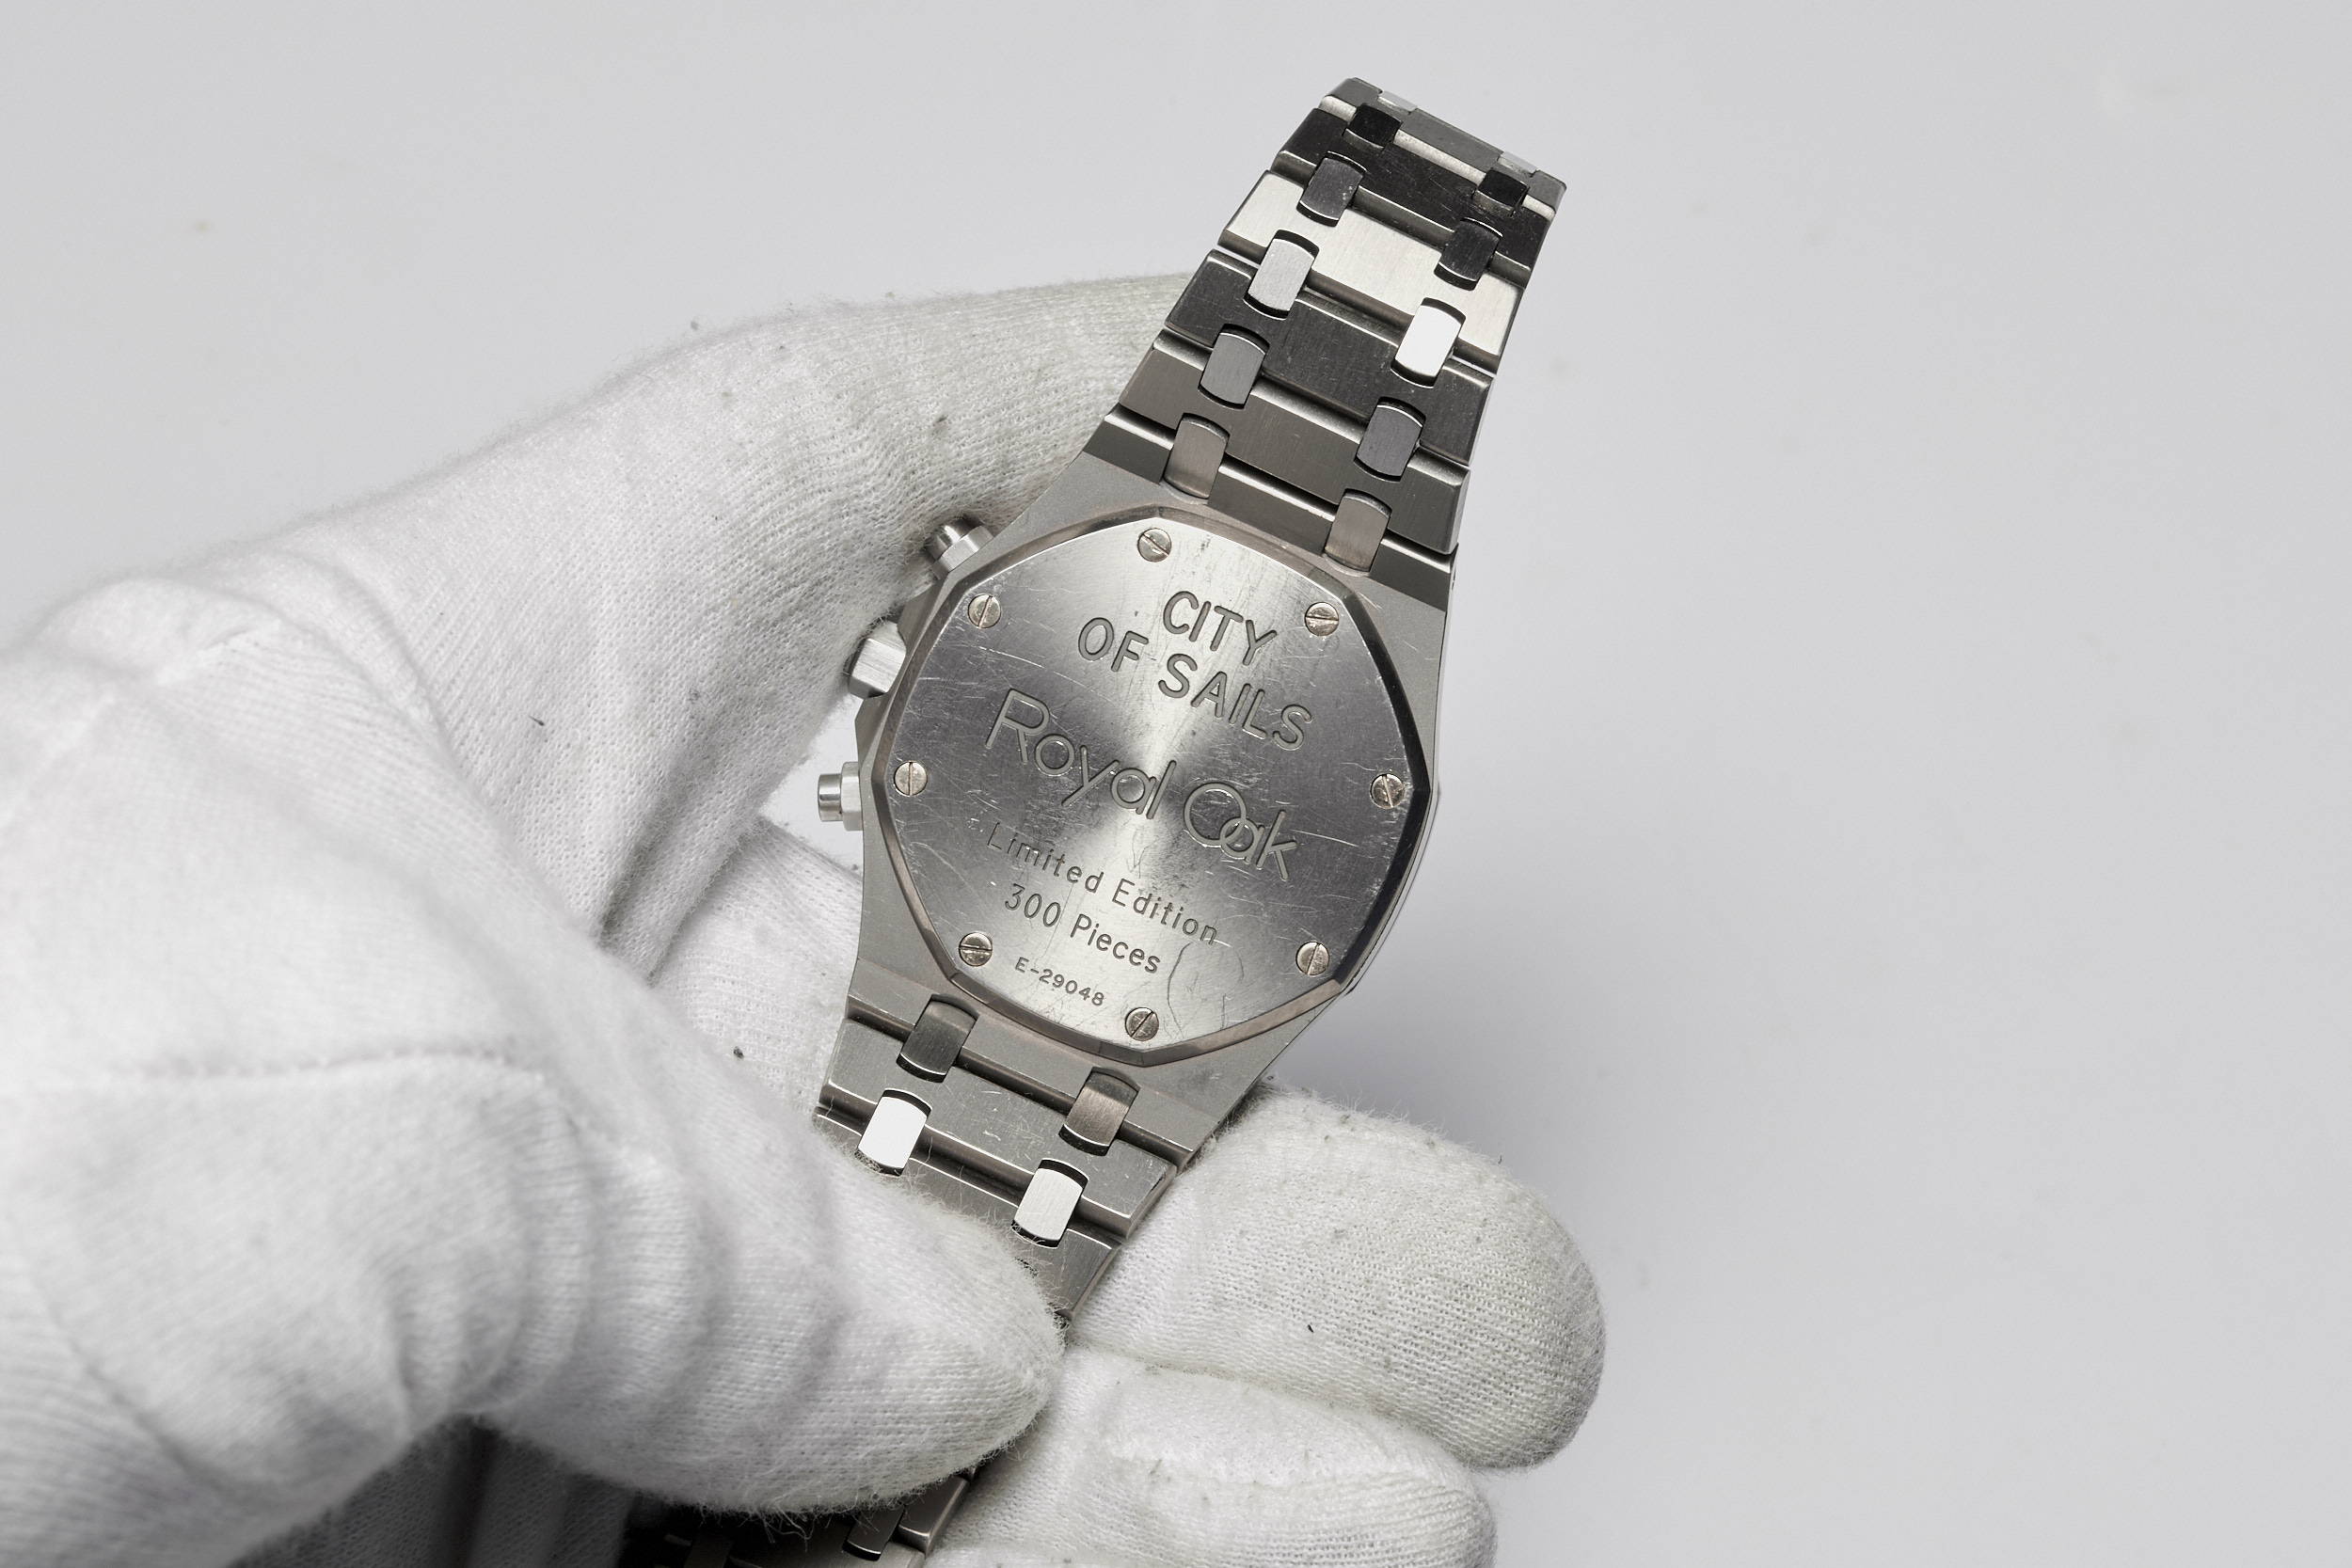 Audemars Piguet Royal Oak Chronograph Watch In Steel Hands-On